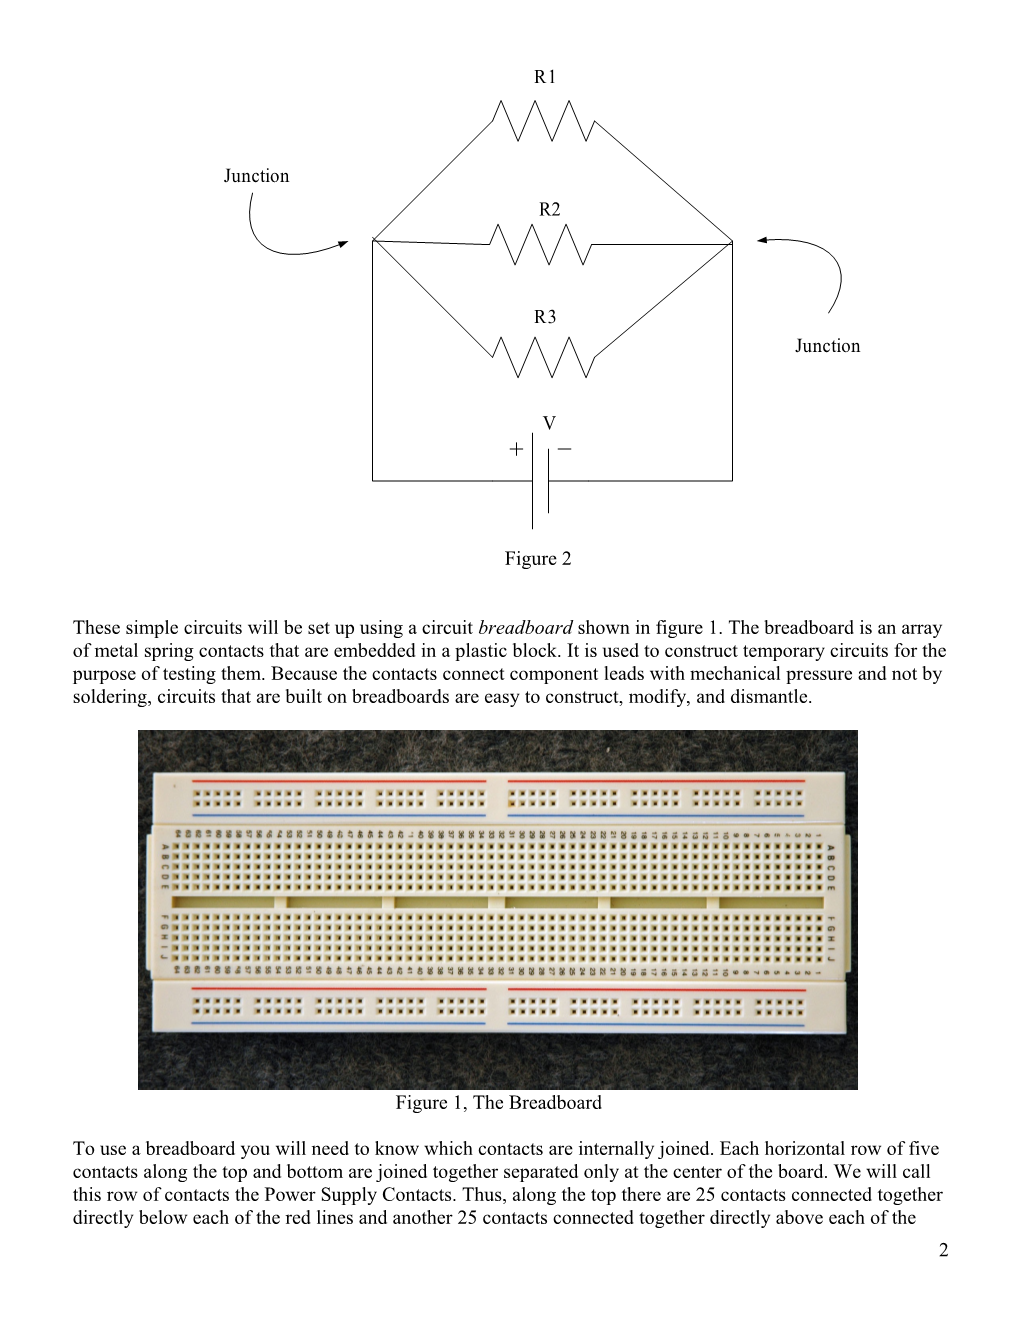 Resistors in Series and Parallel